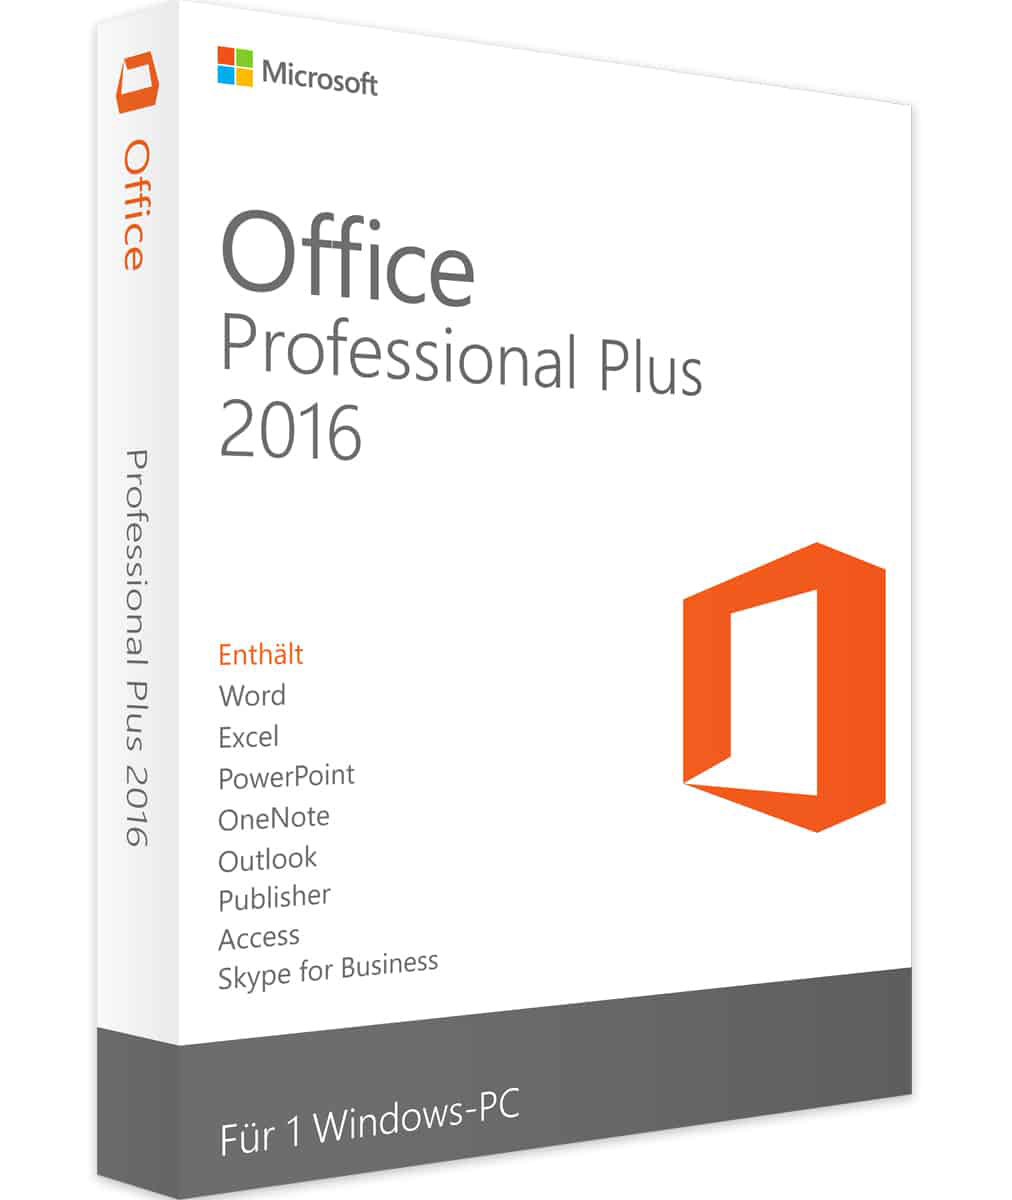 Office-2016-Professional-Plus-Softwarekaufen24-main-image-1.jpg